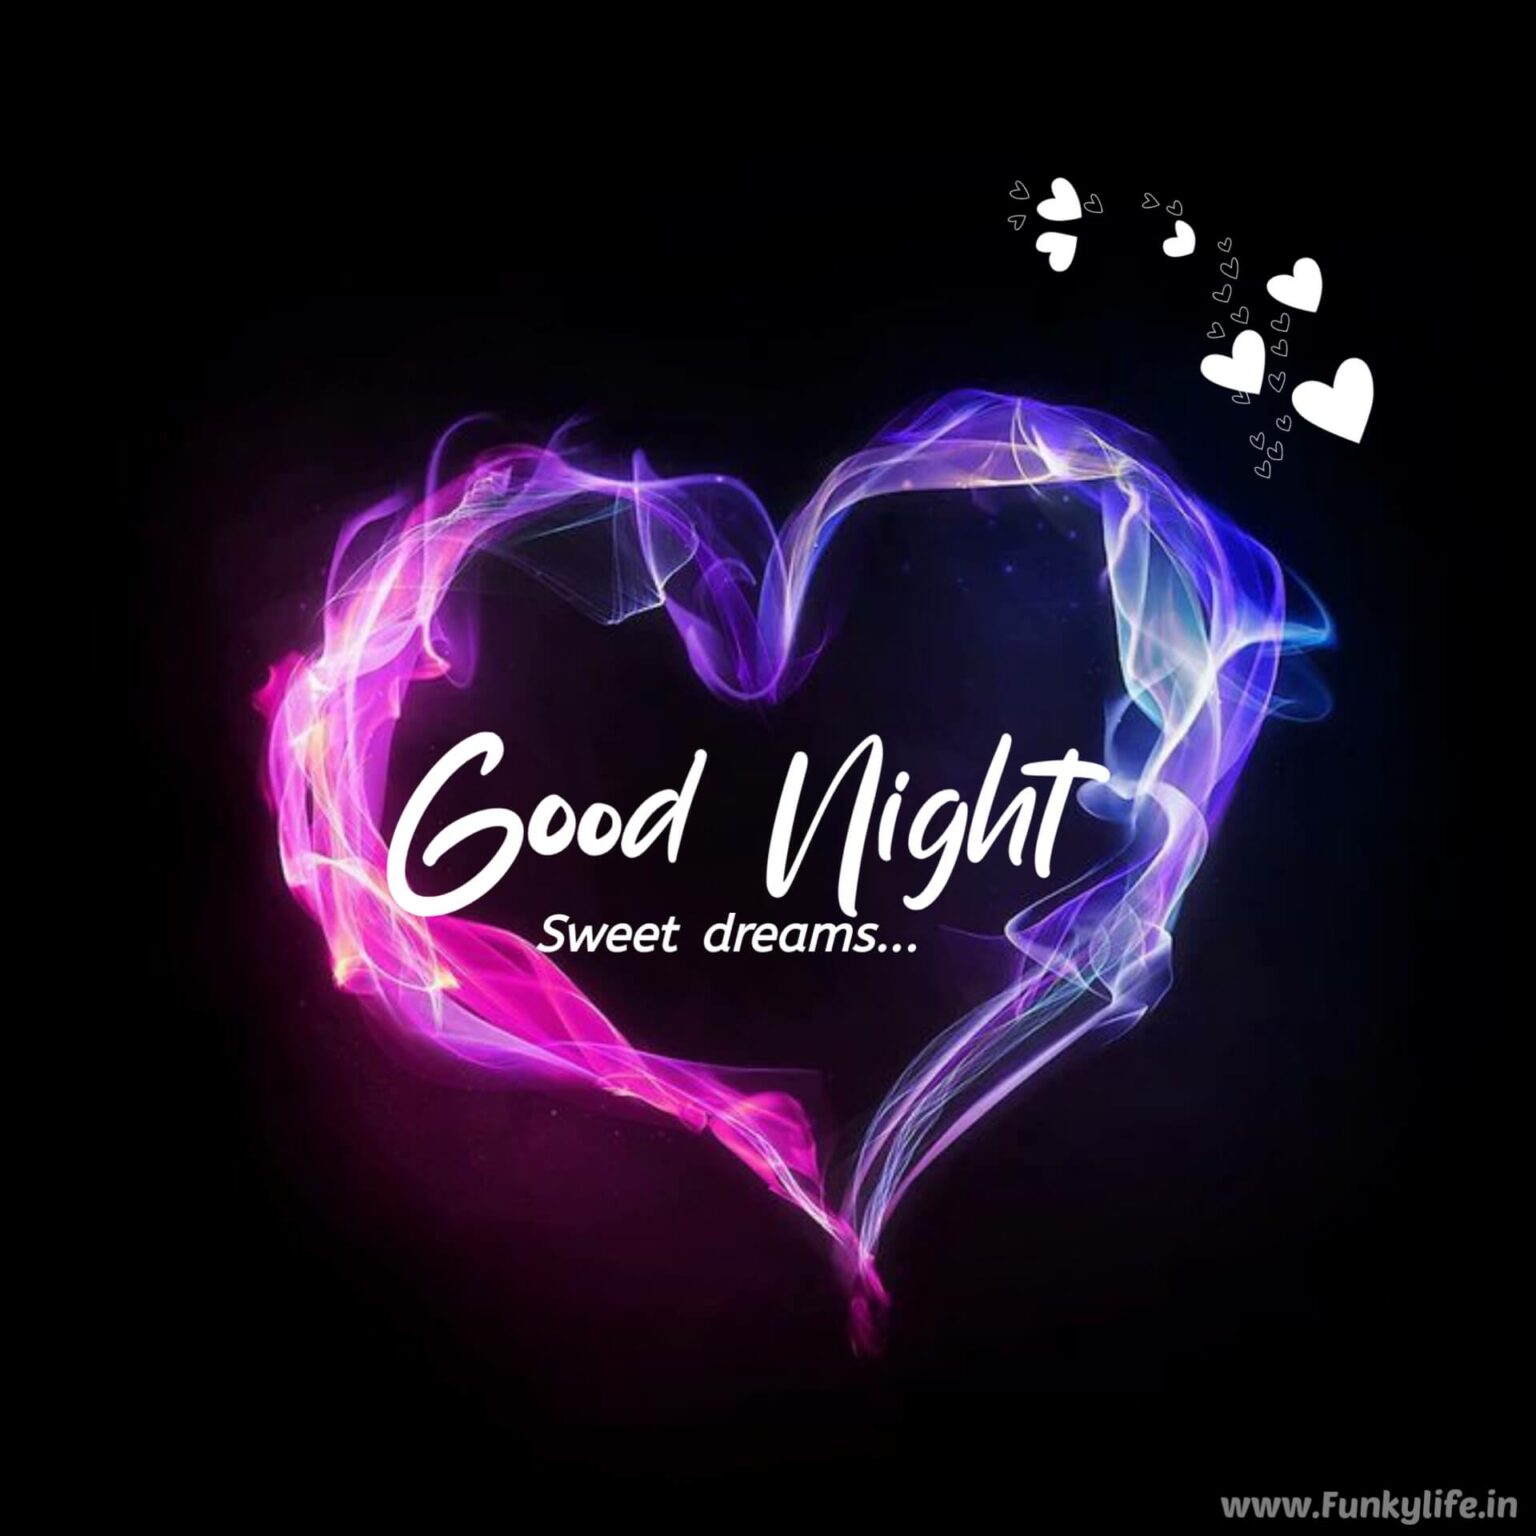 Funkylife Good Night Image 73 1536x1536 